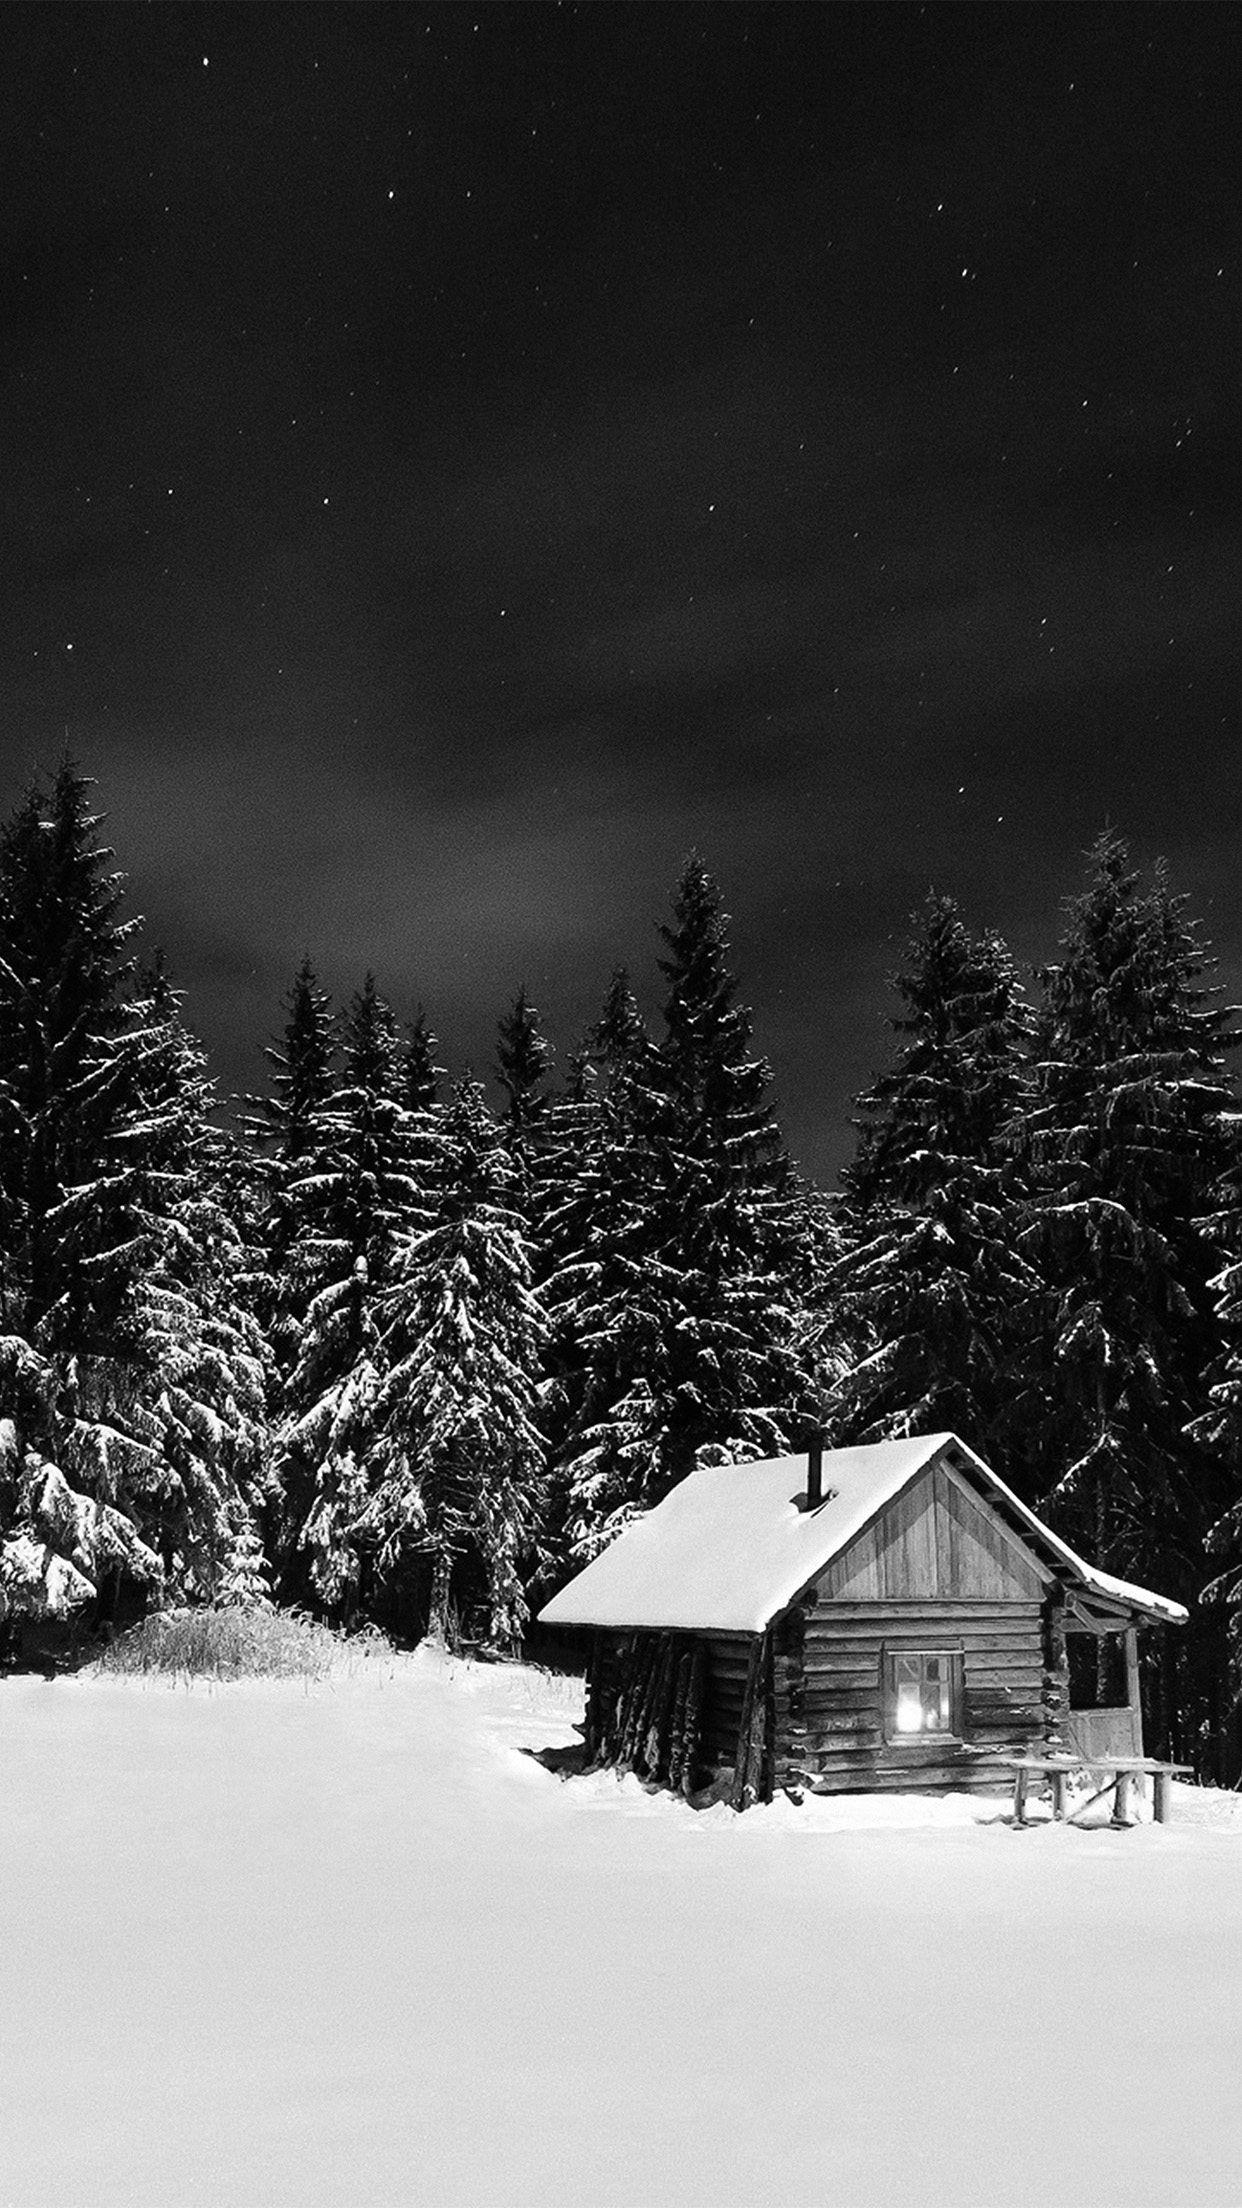 iPhone X wallpaper. winter house night sky christmas starry bw dark